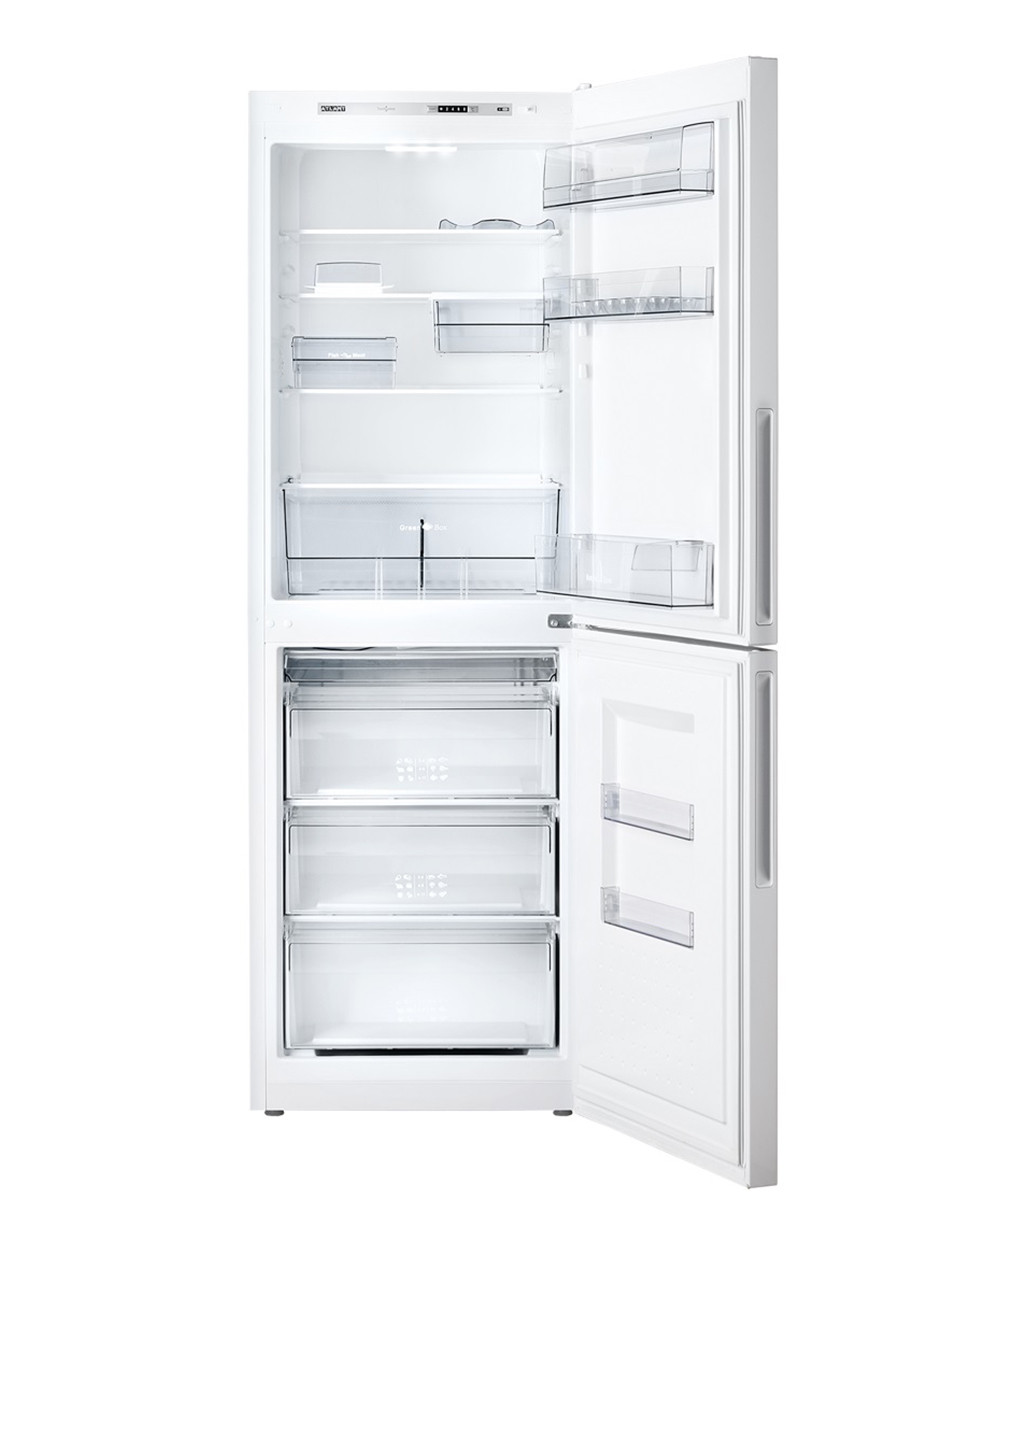 Холодильник ATLANT хм 4619-100 (129765230)